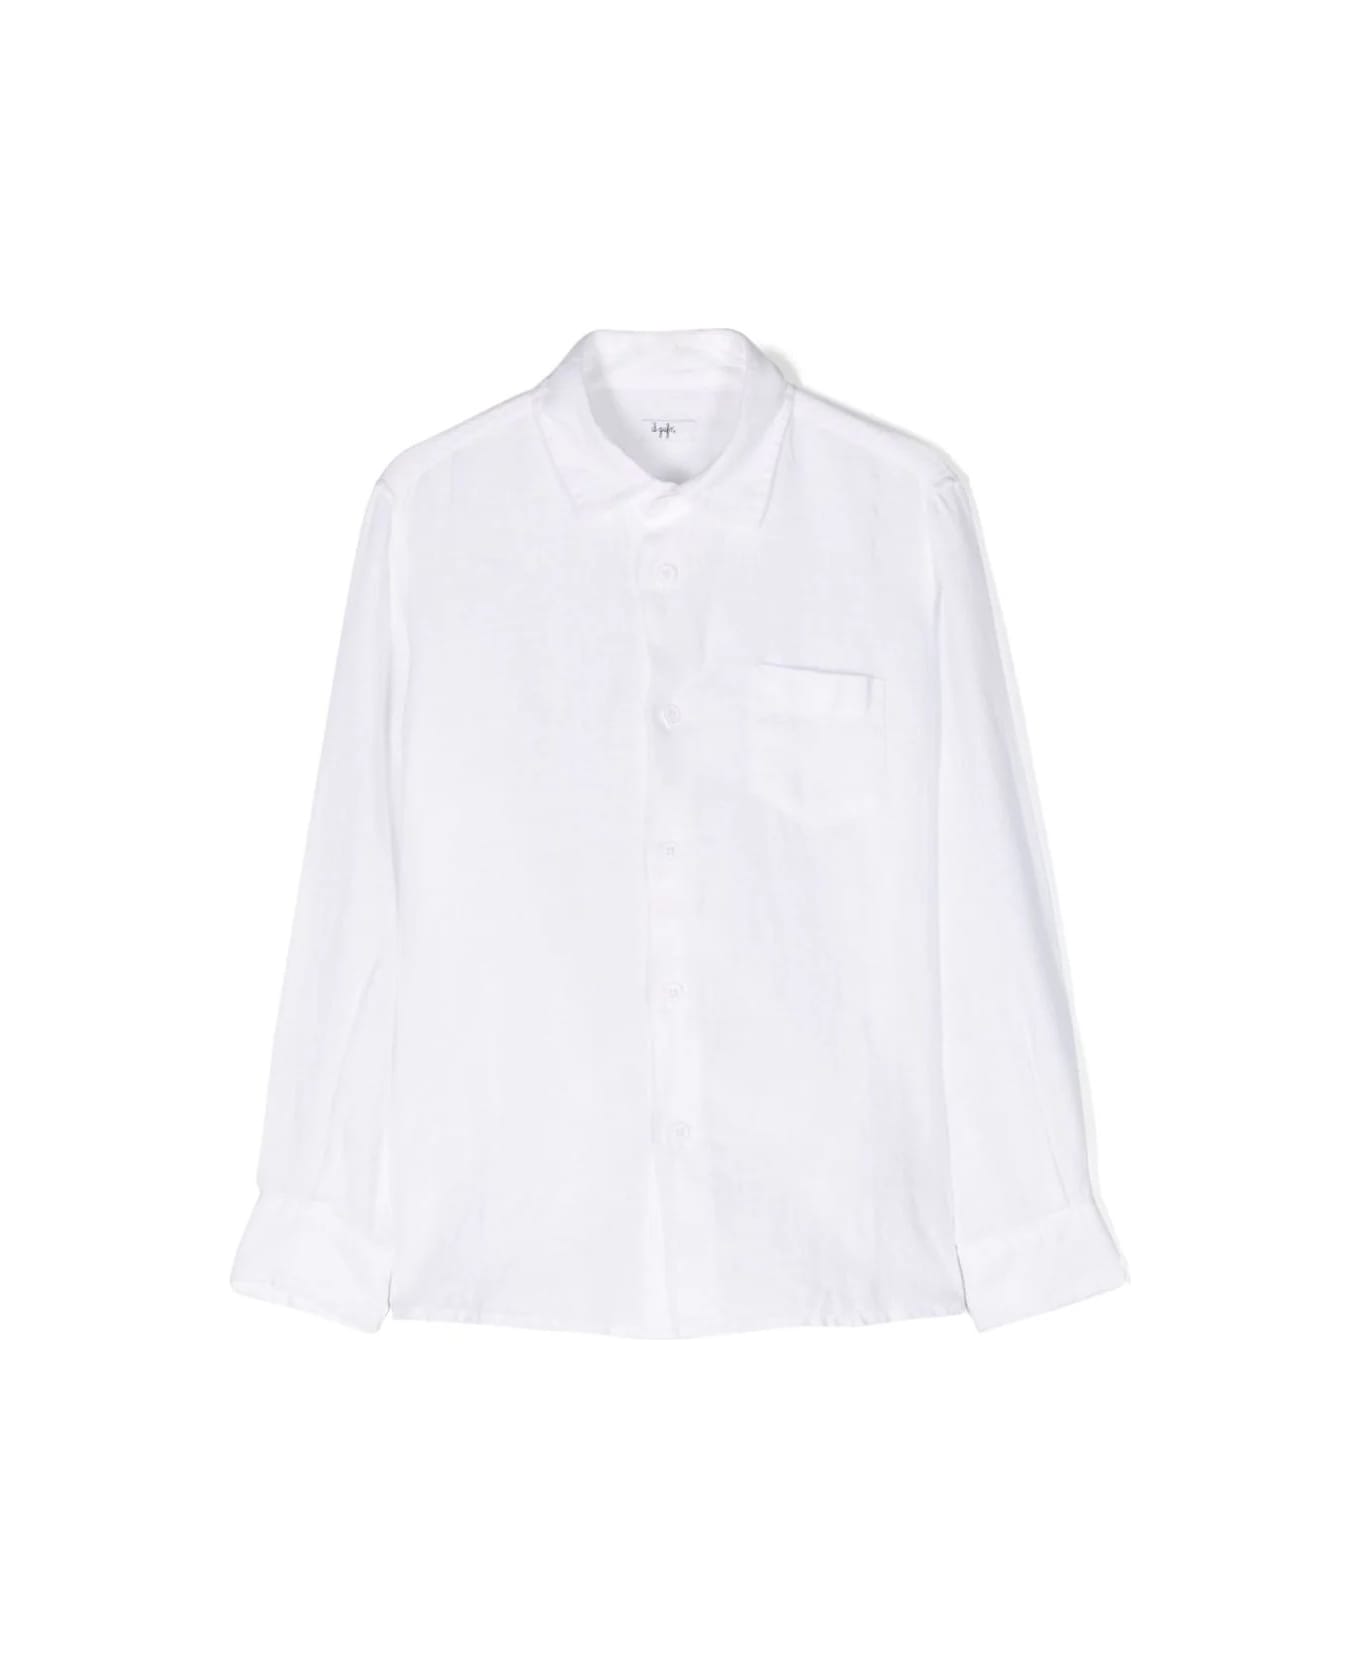 Il Gufo White Linen Shirt With Pocket - Bianco シャツ